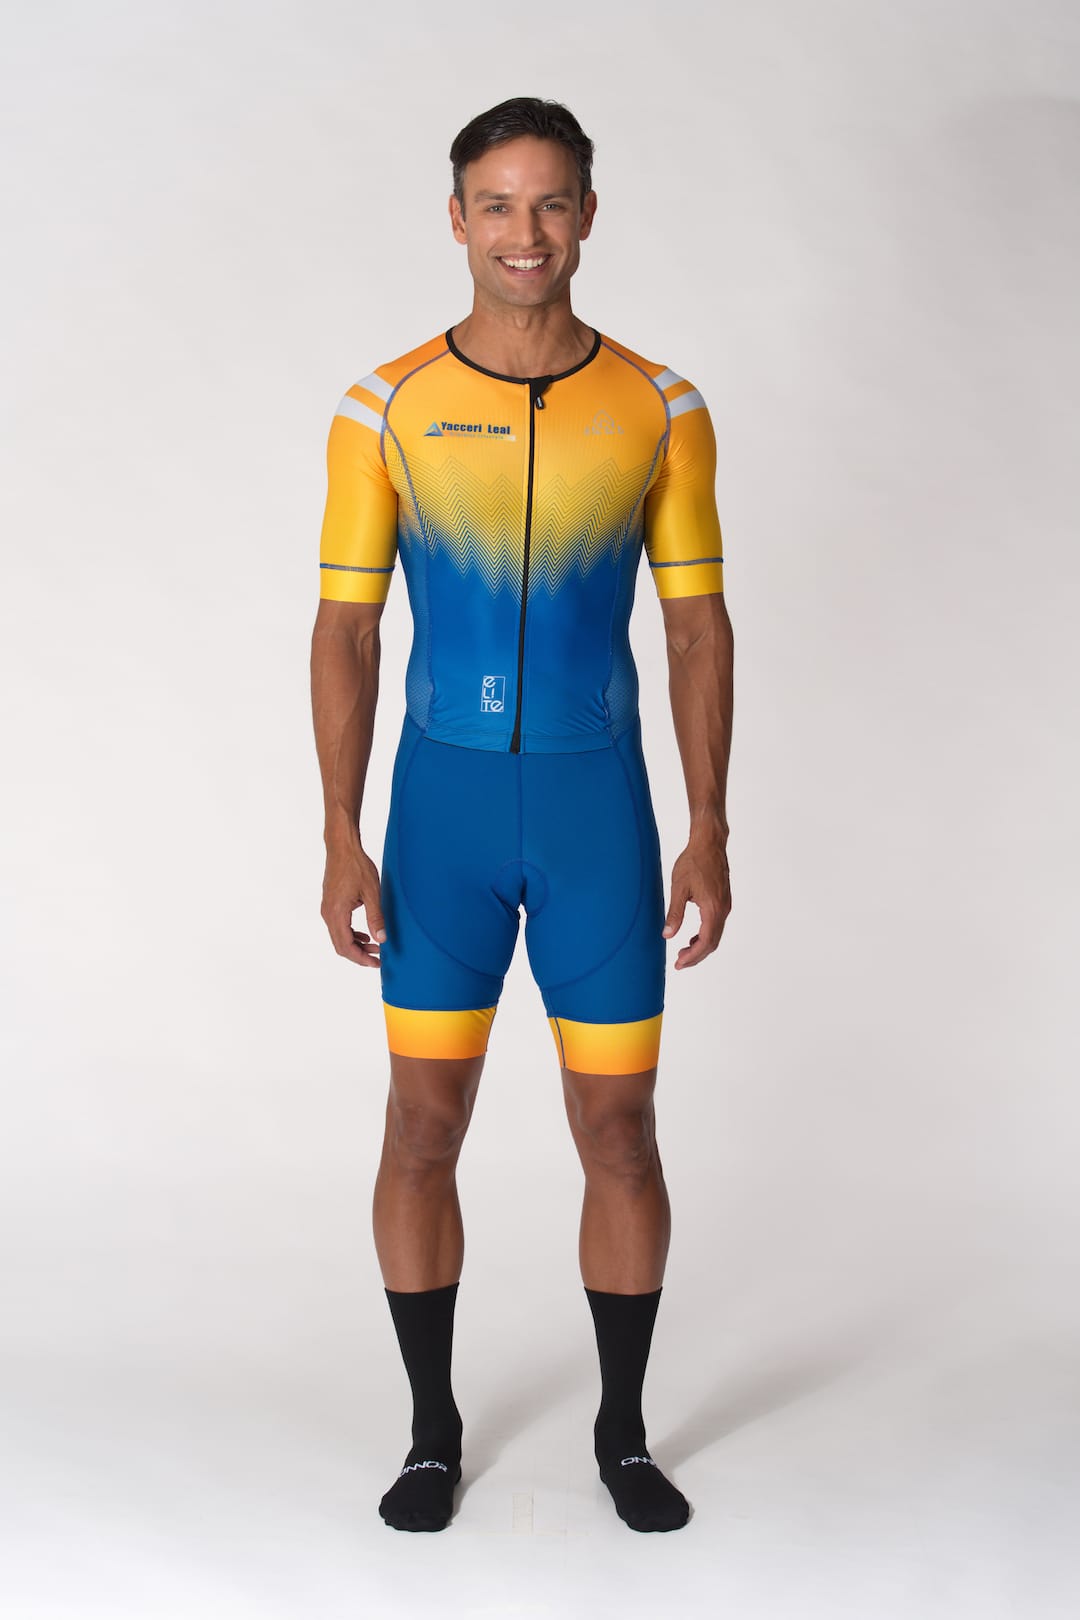 custom cycling skinsuit no minimum order , customized cycling clothing, custom cycling jersey and shorts